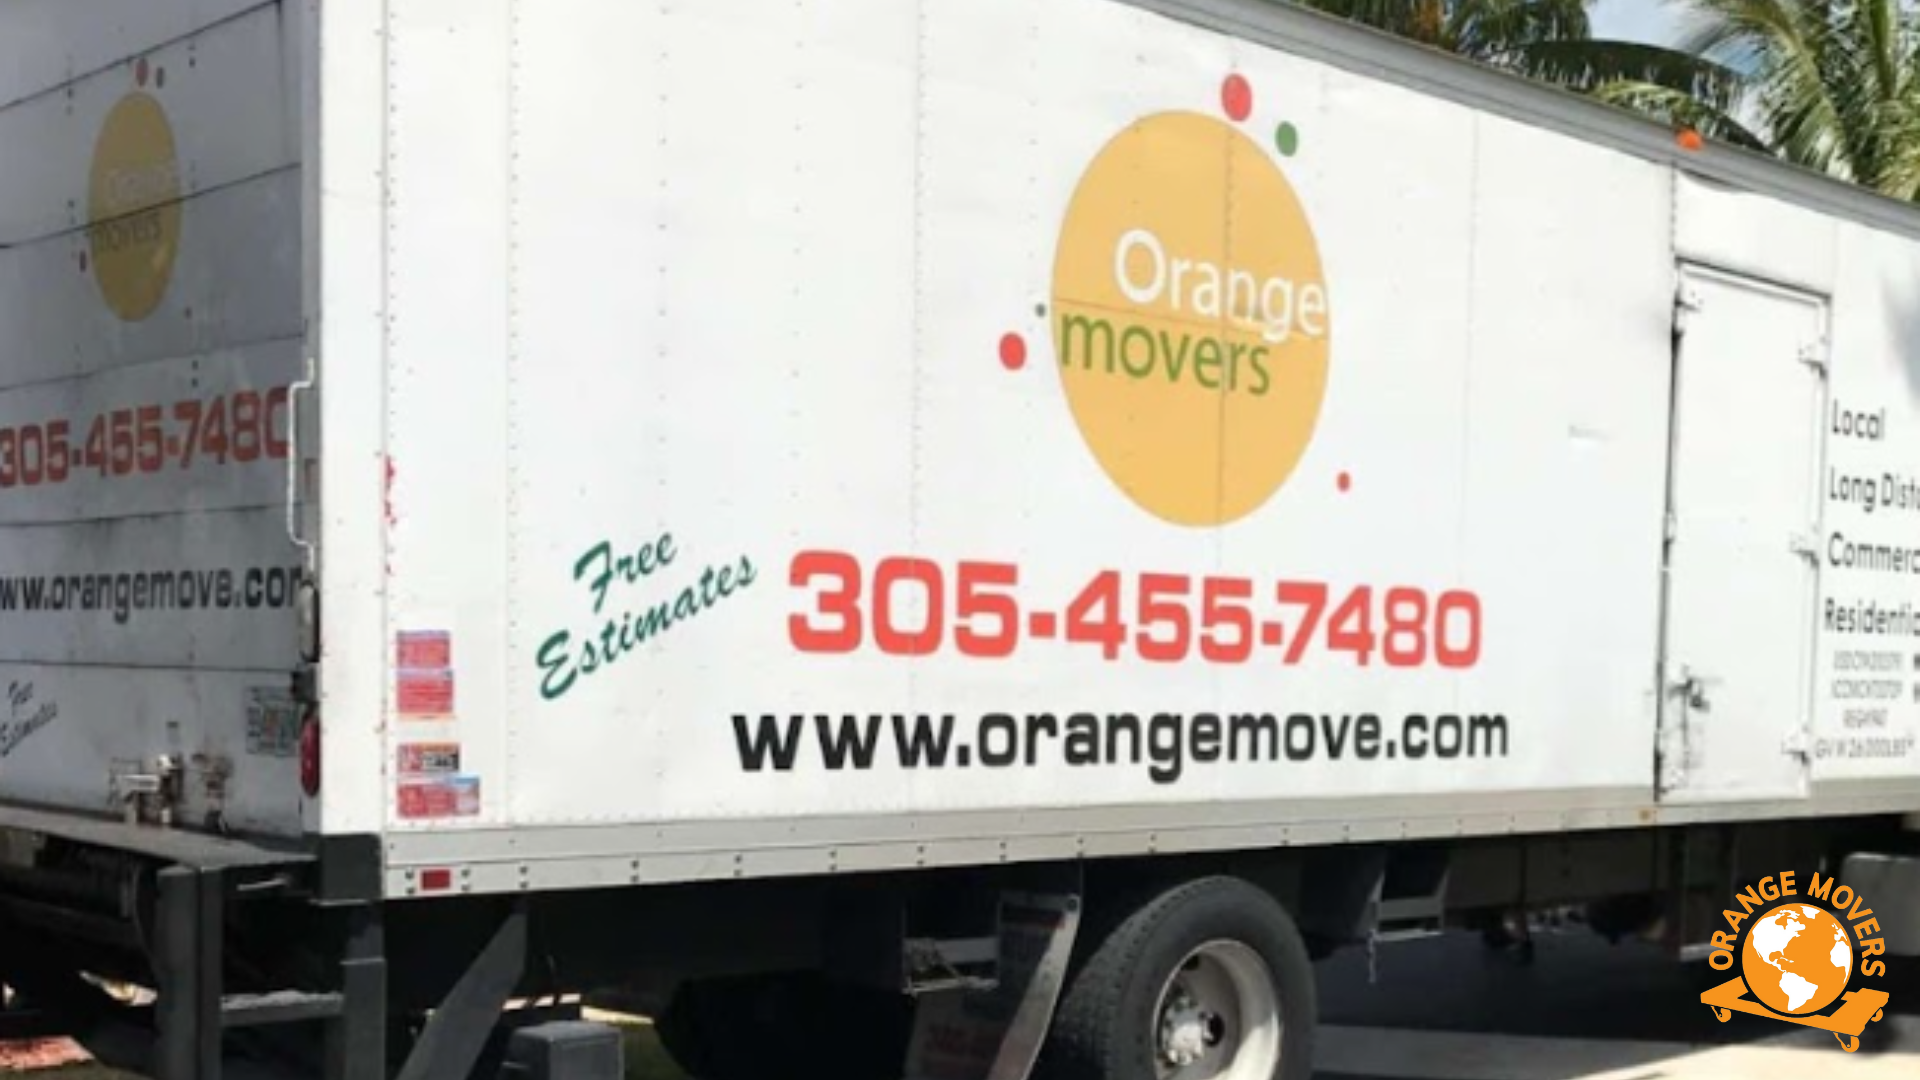 Internal Movers Companies in Pompano Beach Florida